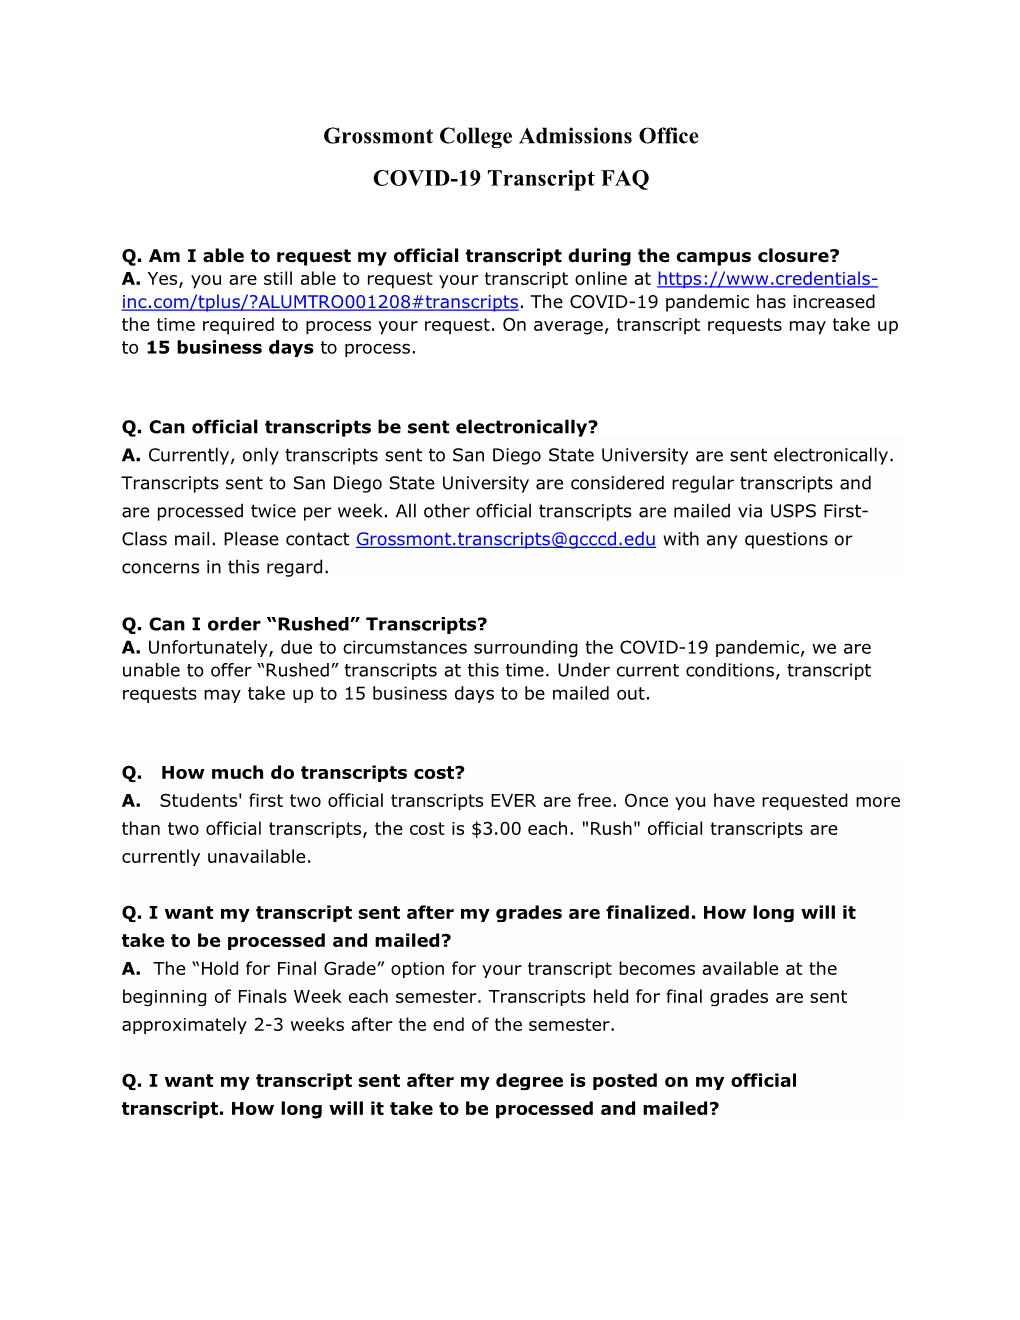 Grossmont College Admissions Office COVID-19 Transcript FAQ